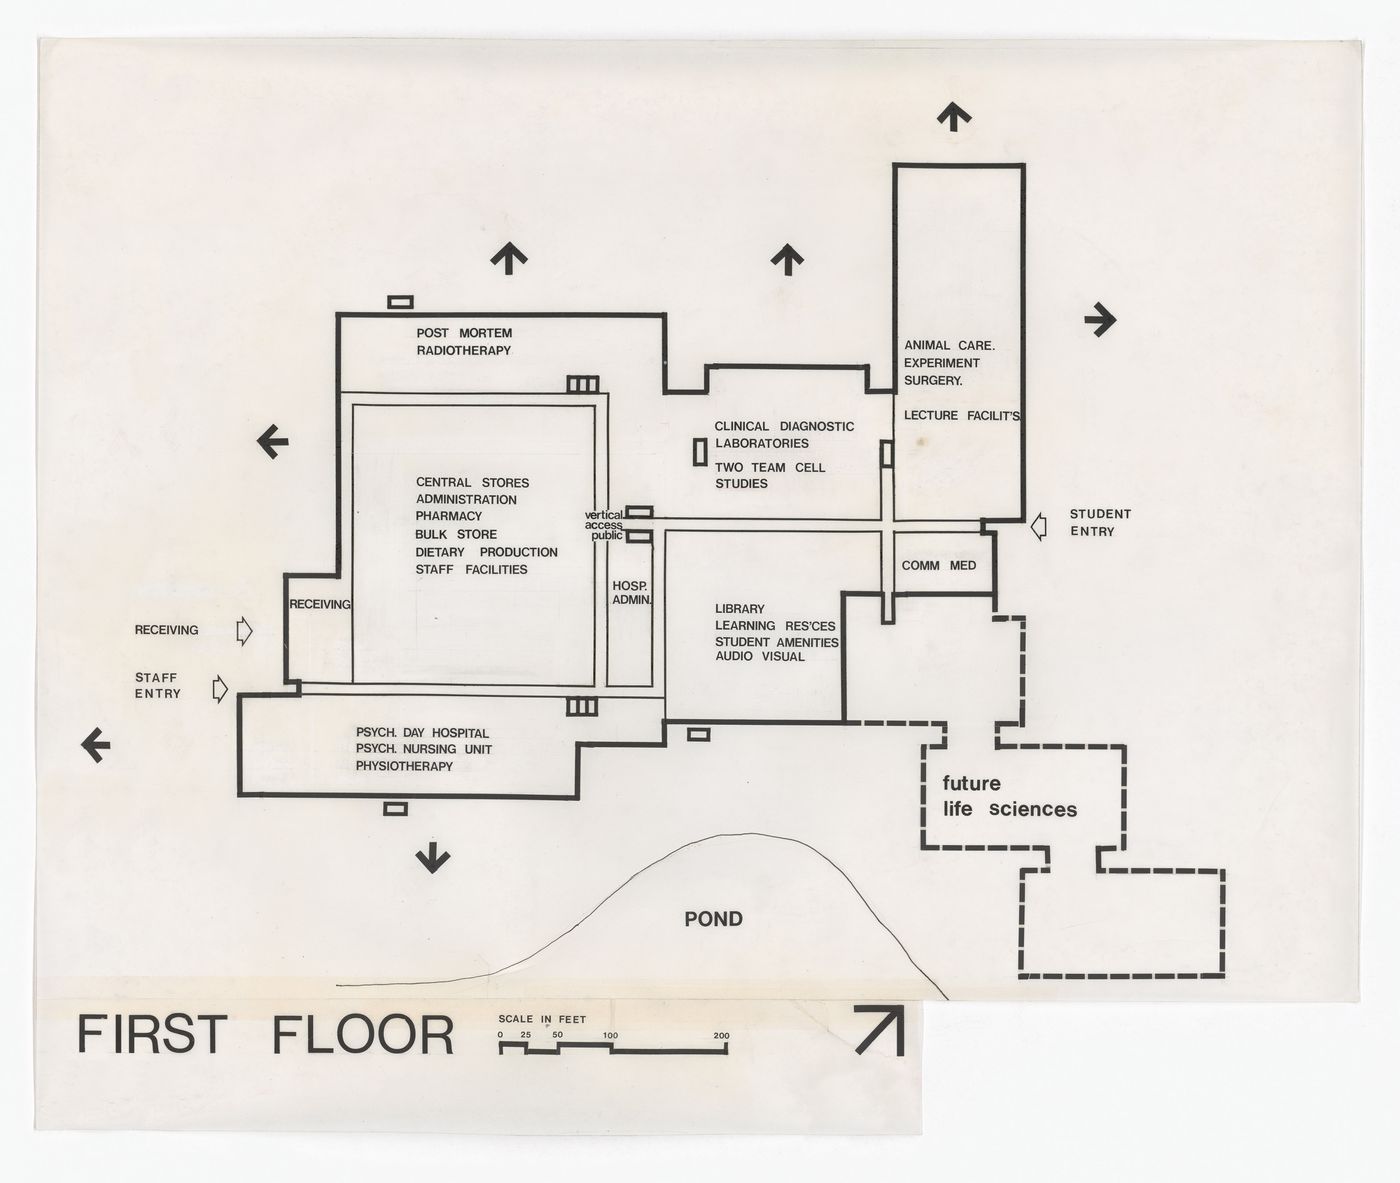 First floor diagram for Memorial University of Newfoundland, Health Sciences Complex, St. Johns, Newfoundland